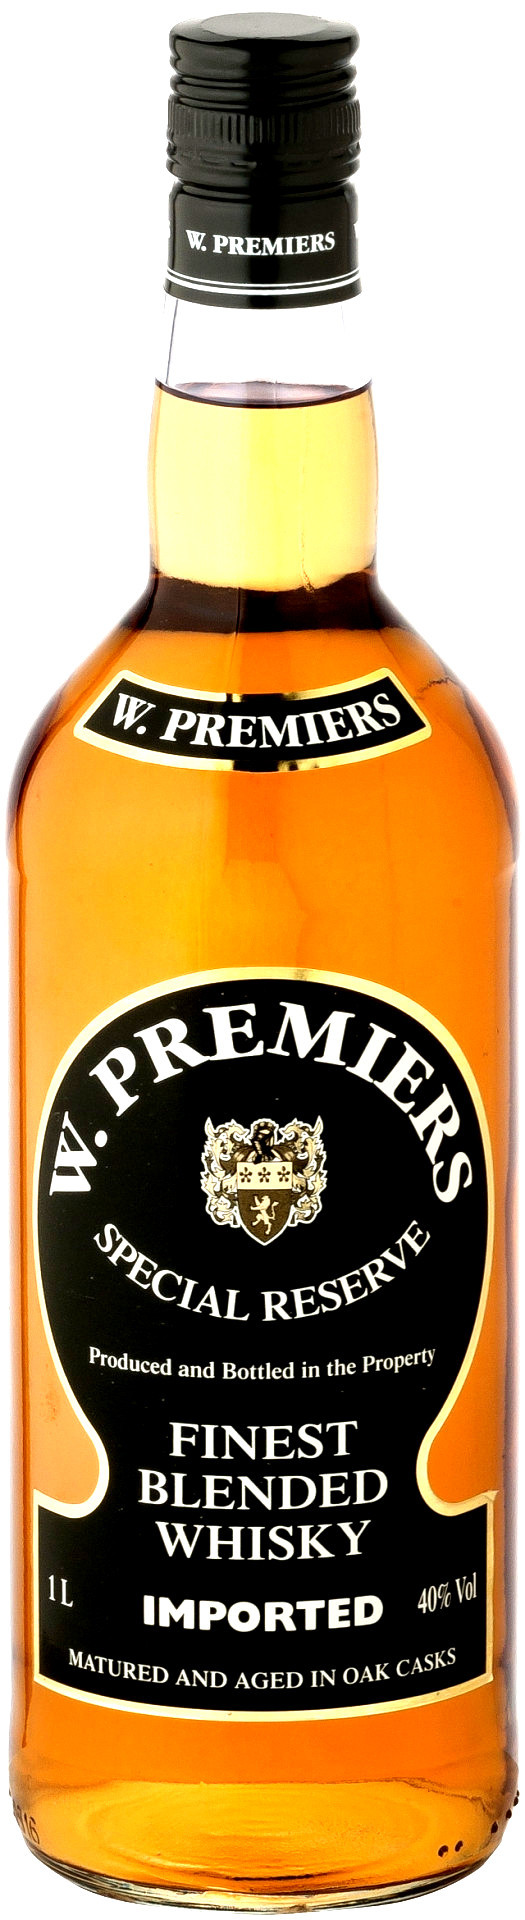 W.Premiers Whisky 1l